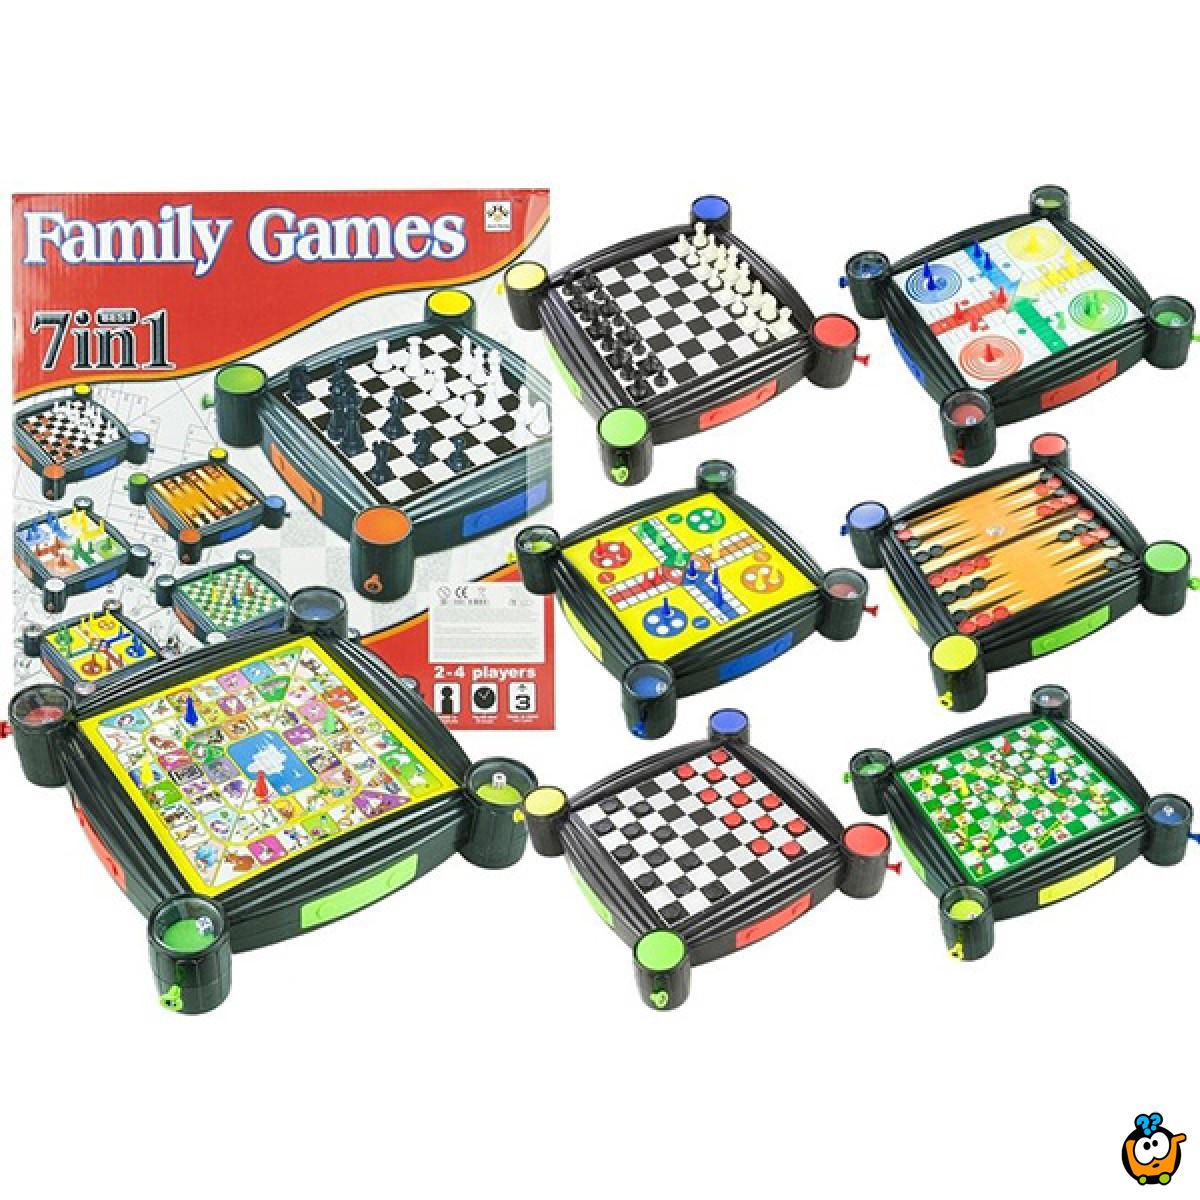  7 u 1 Family Games - Društvene igre za celu porodicu